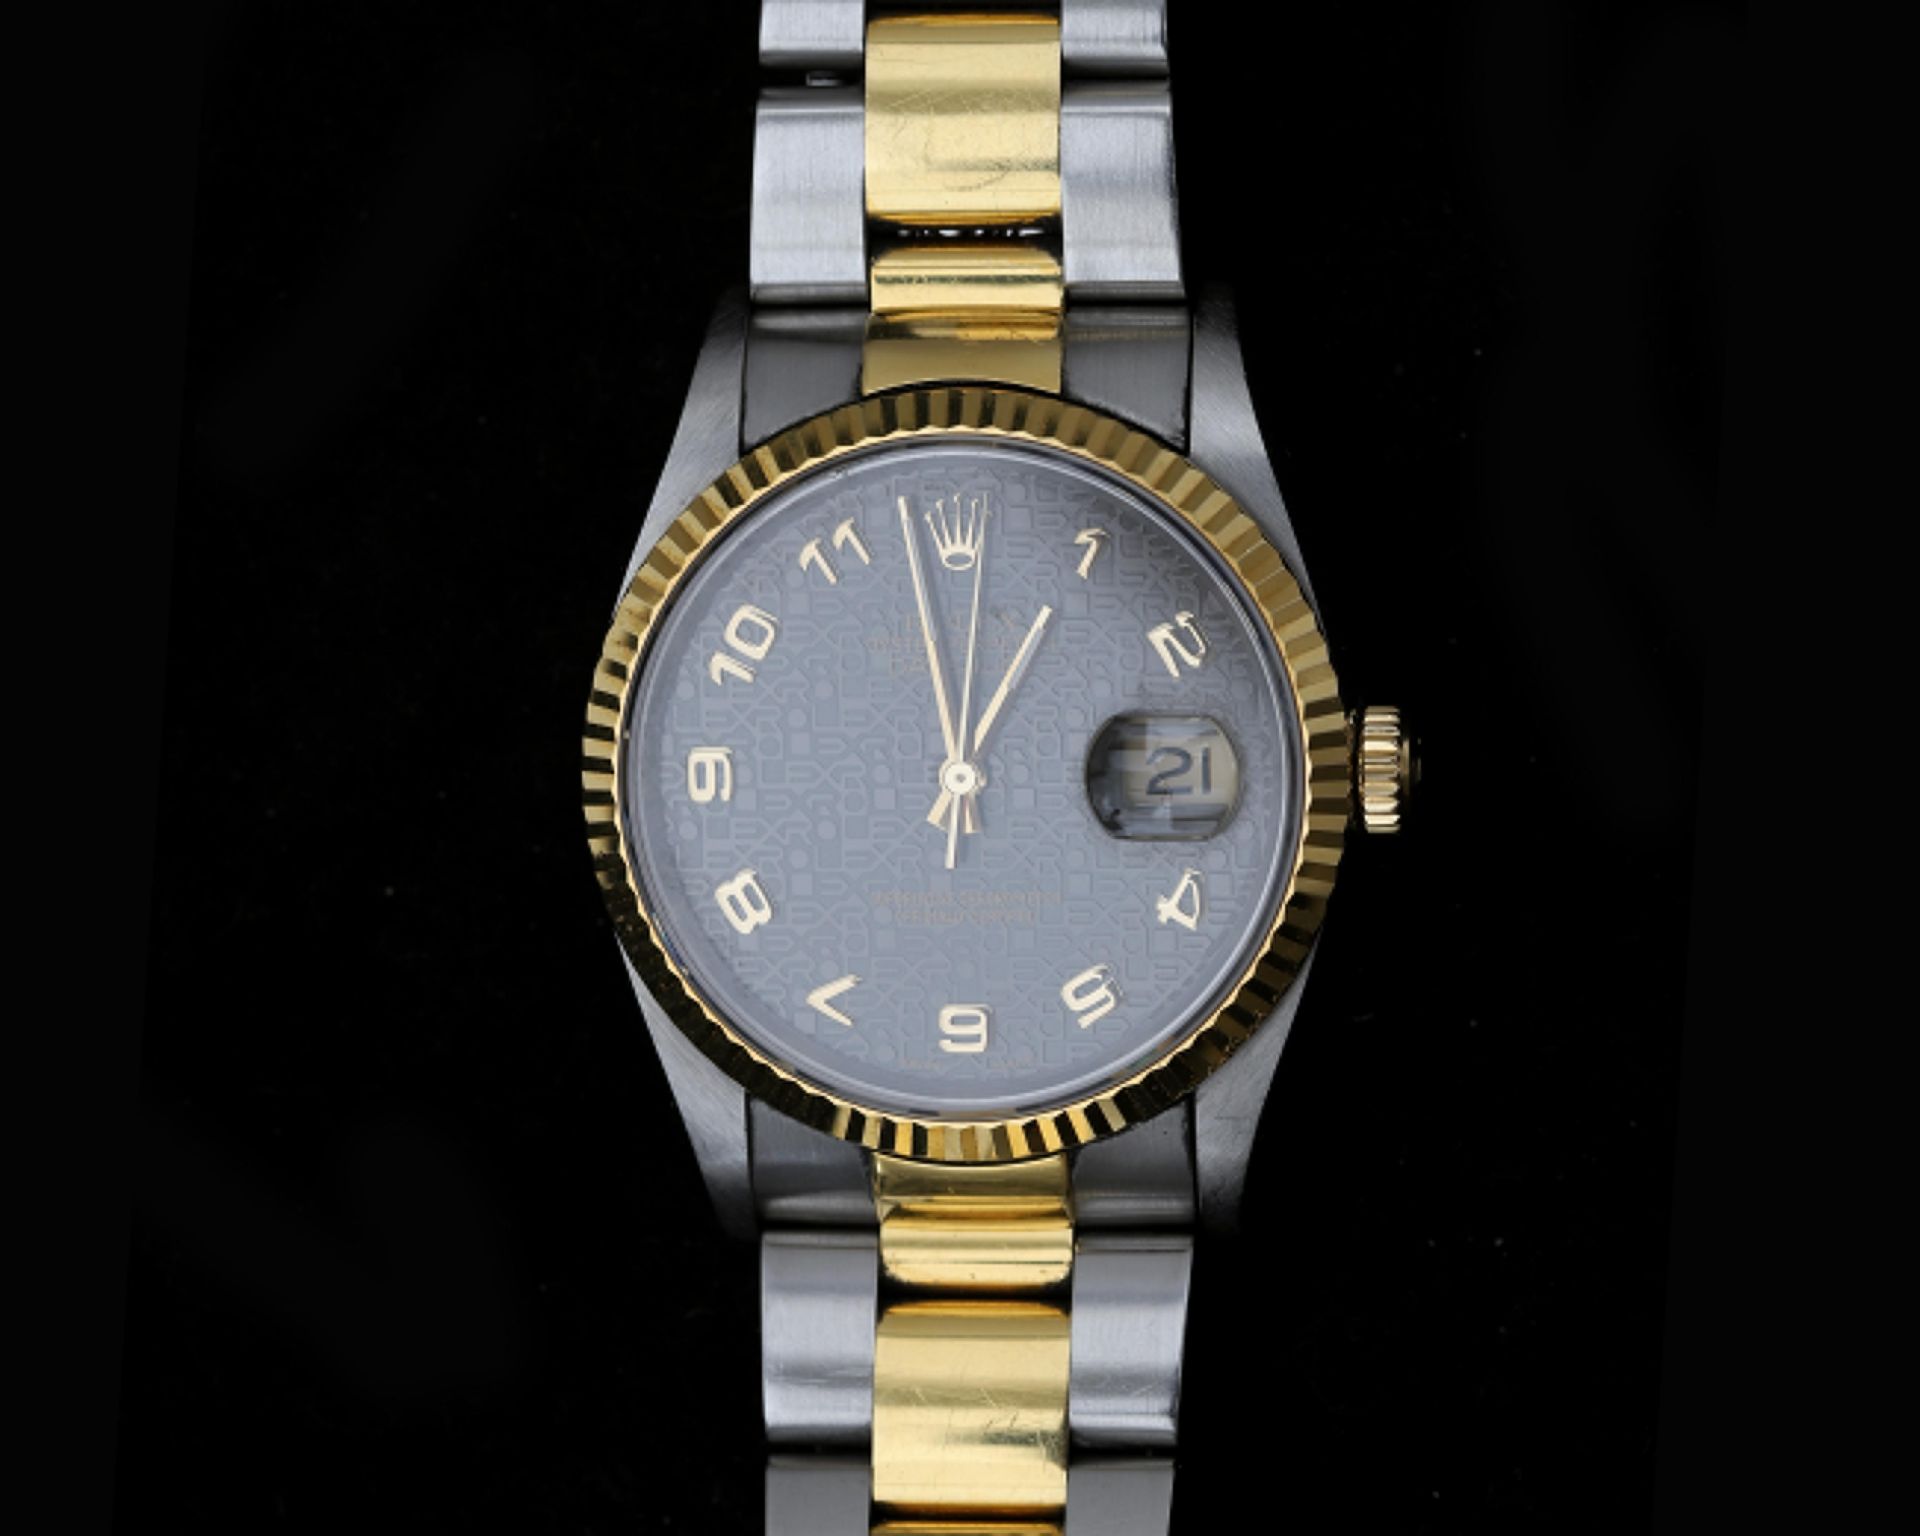 A bi-color unisex Rolex Datejust Oyster Perpetual wristwatch